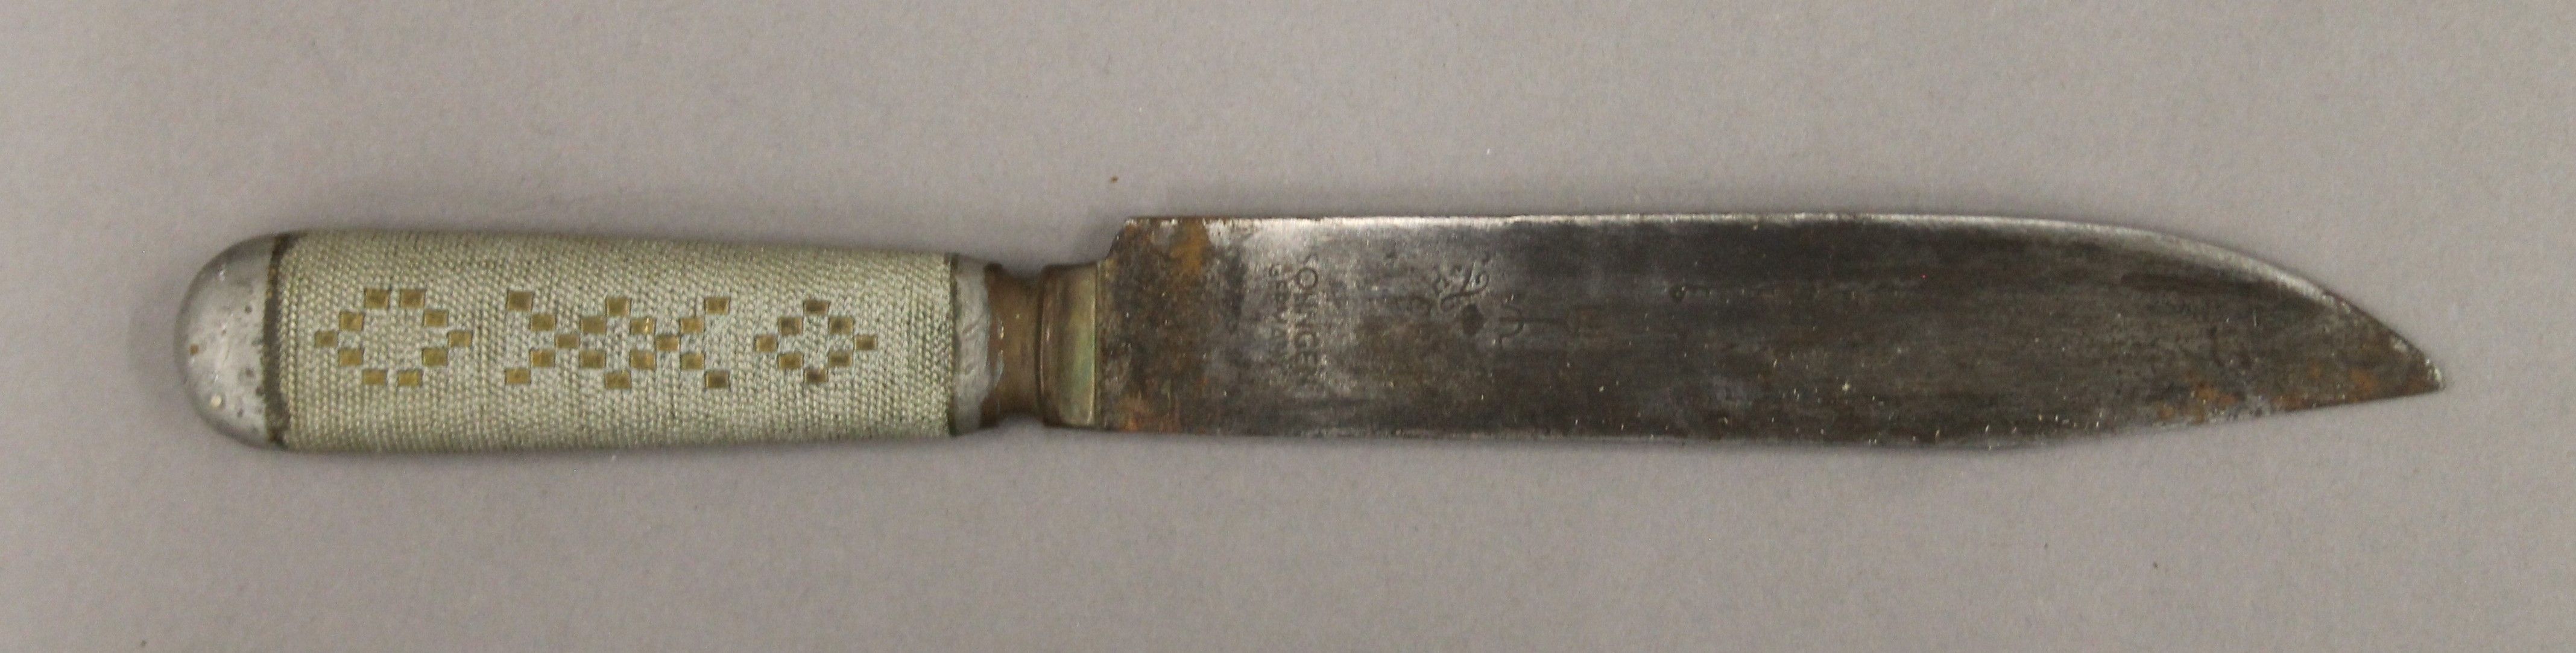 A Solingen dagger in sheath. 24 cm long. - Image 4 of 6